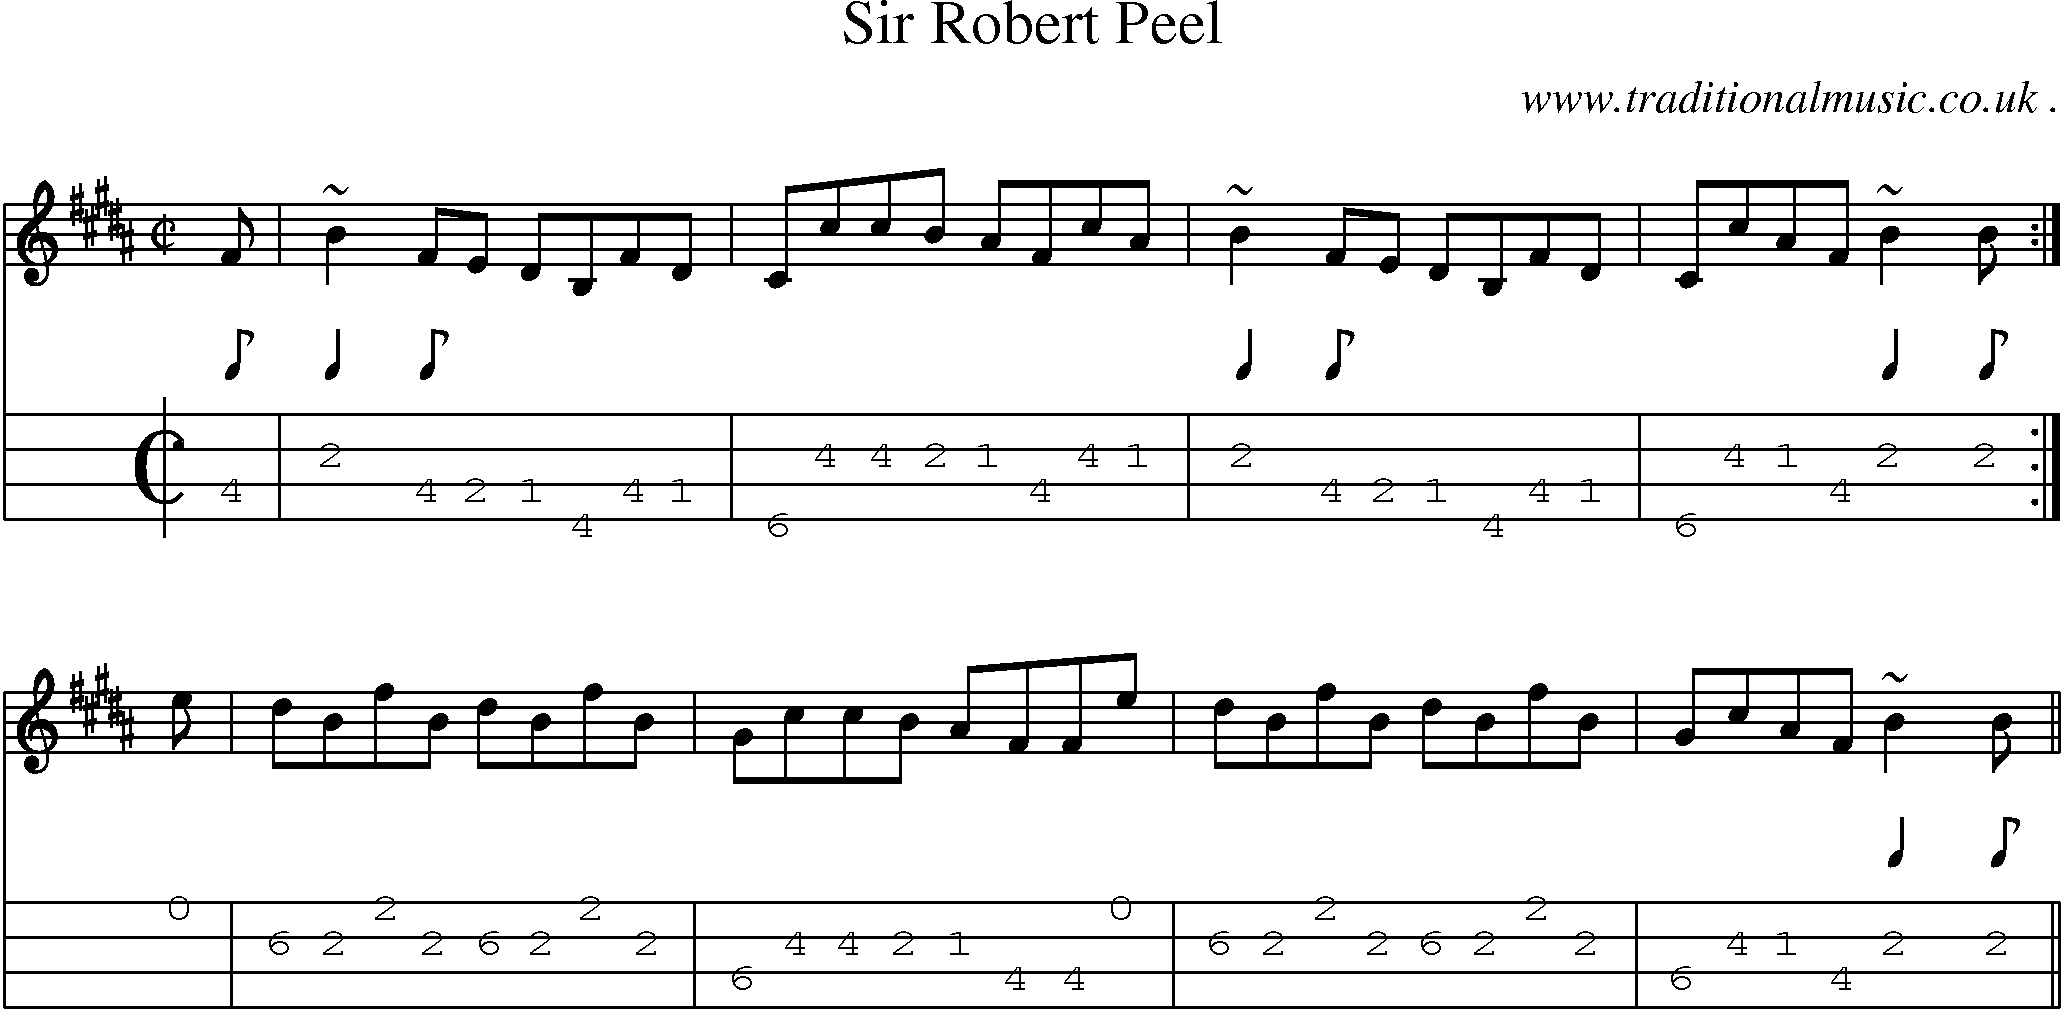 Sheet-music  score, Chords and Mandolin Tabs for Sir Robert Peel